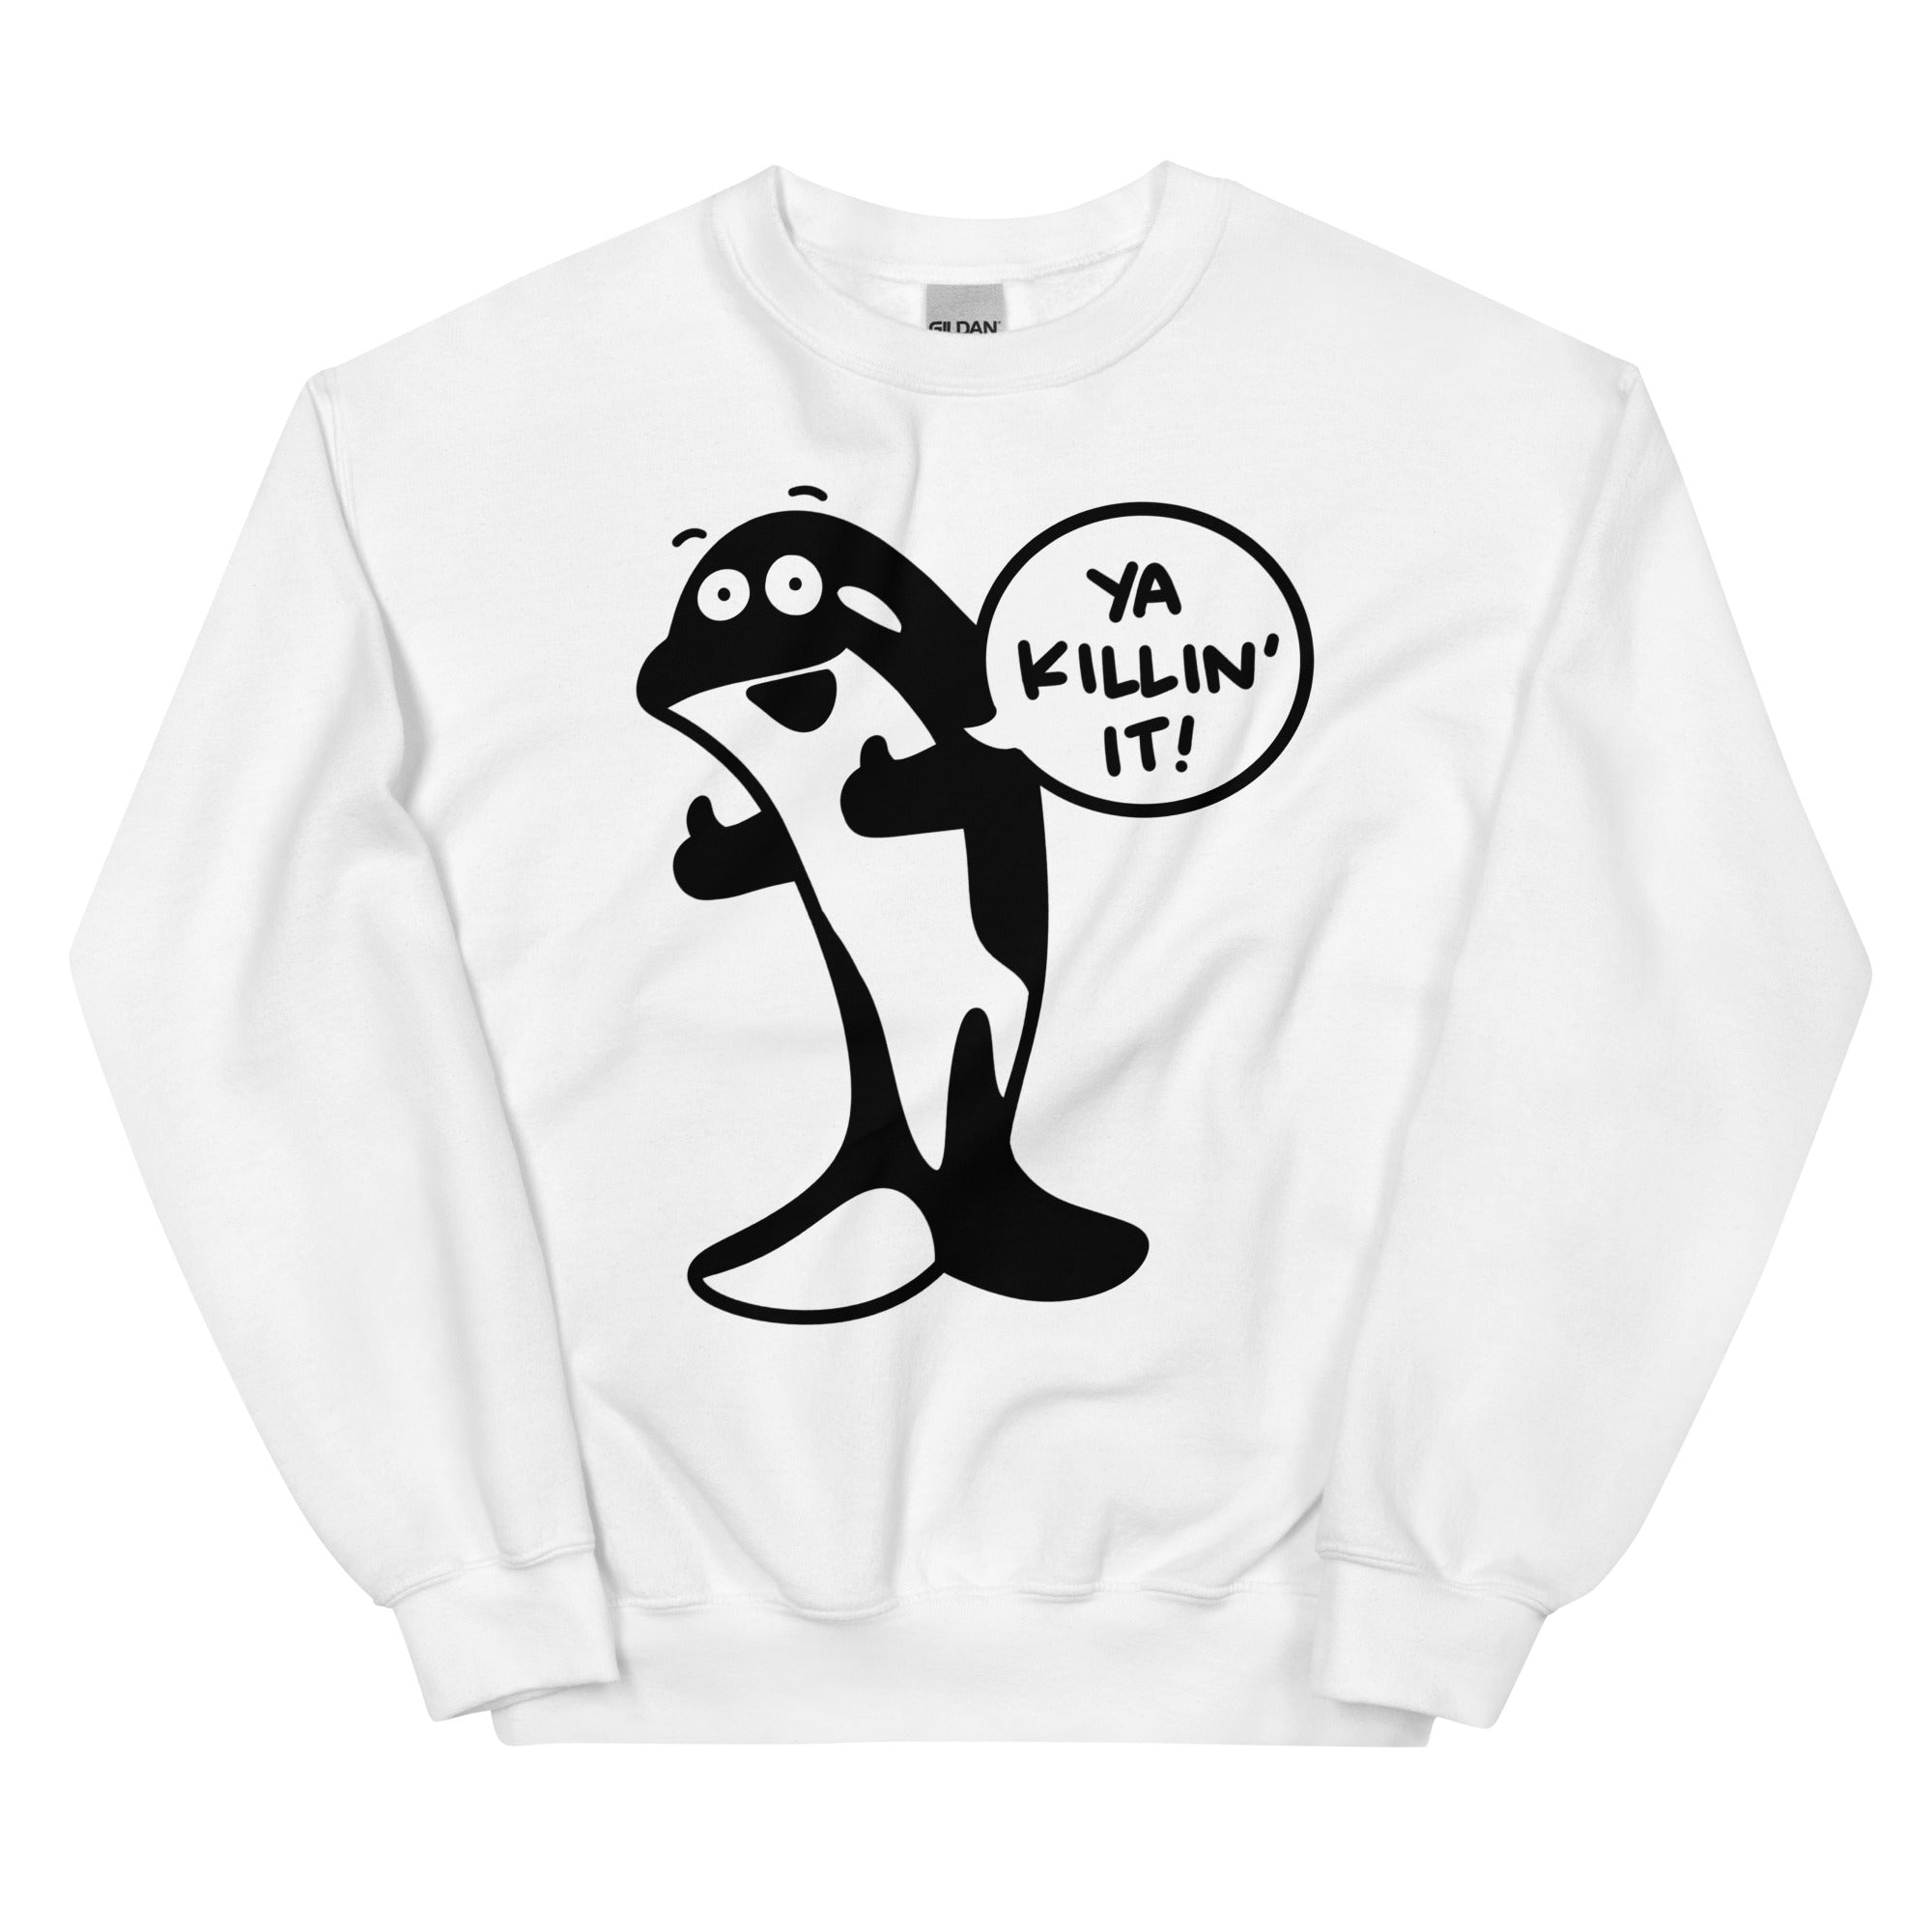 Cute marine biology sweatshirt for Cetologist sweatshirt, Killer Whale sweatshirt, orcha sweatshirt for marine biologist gift